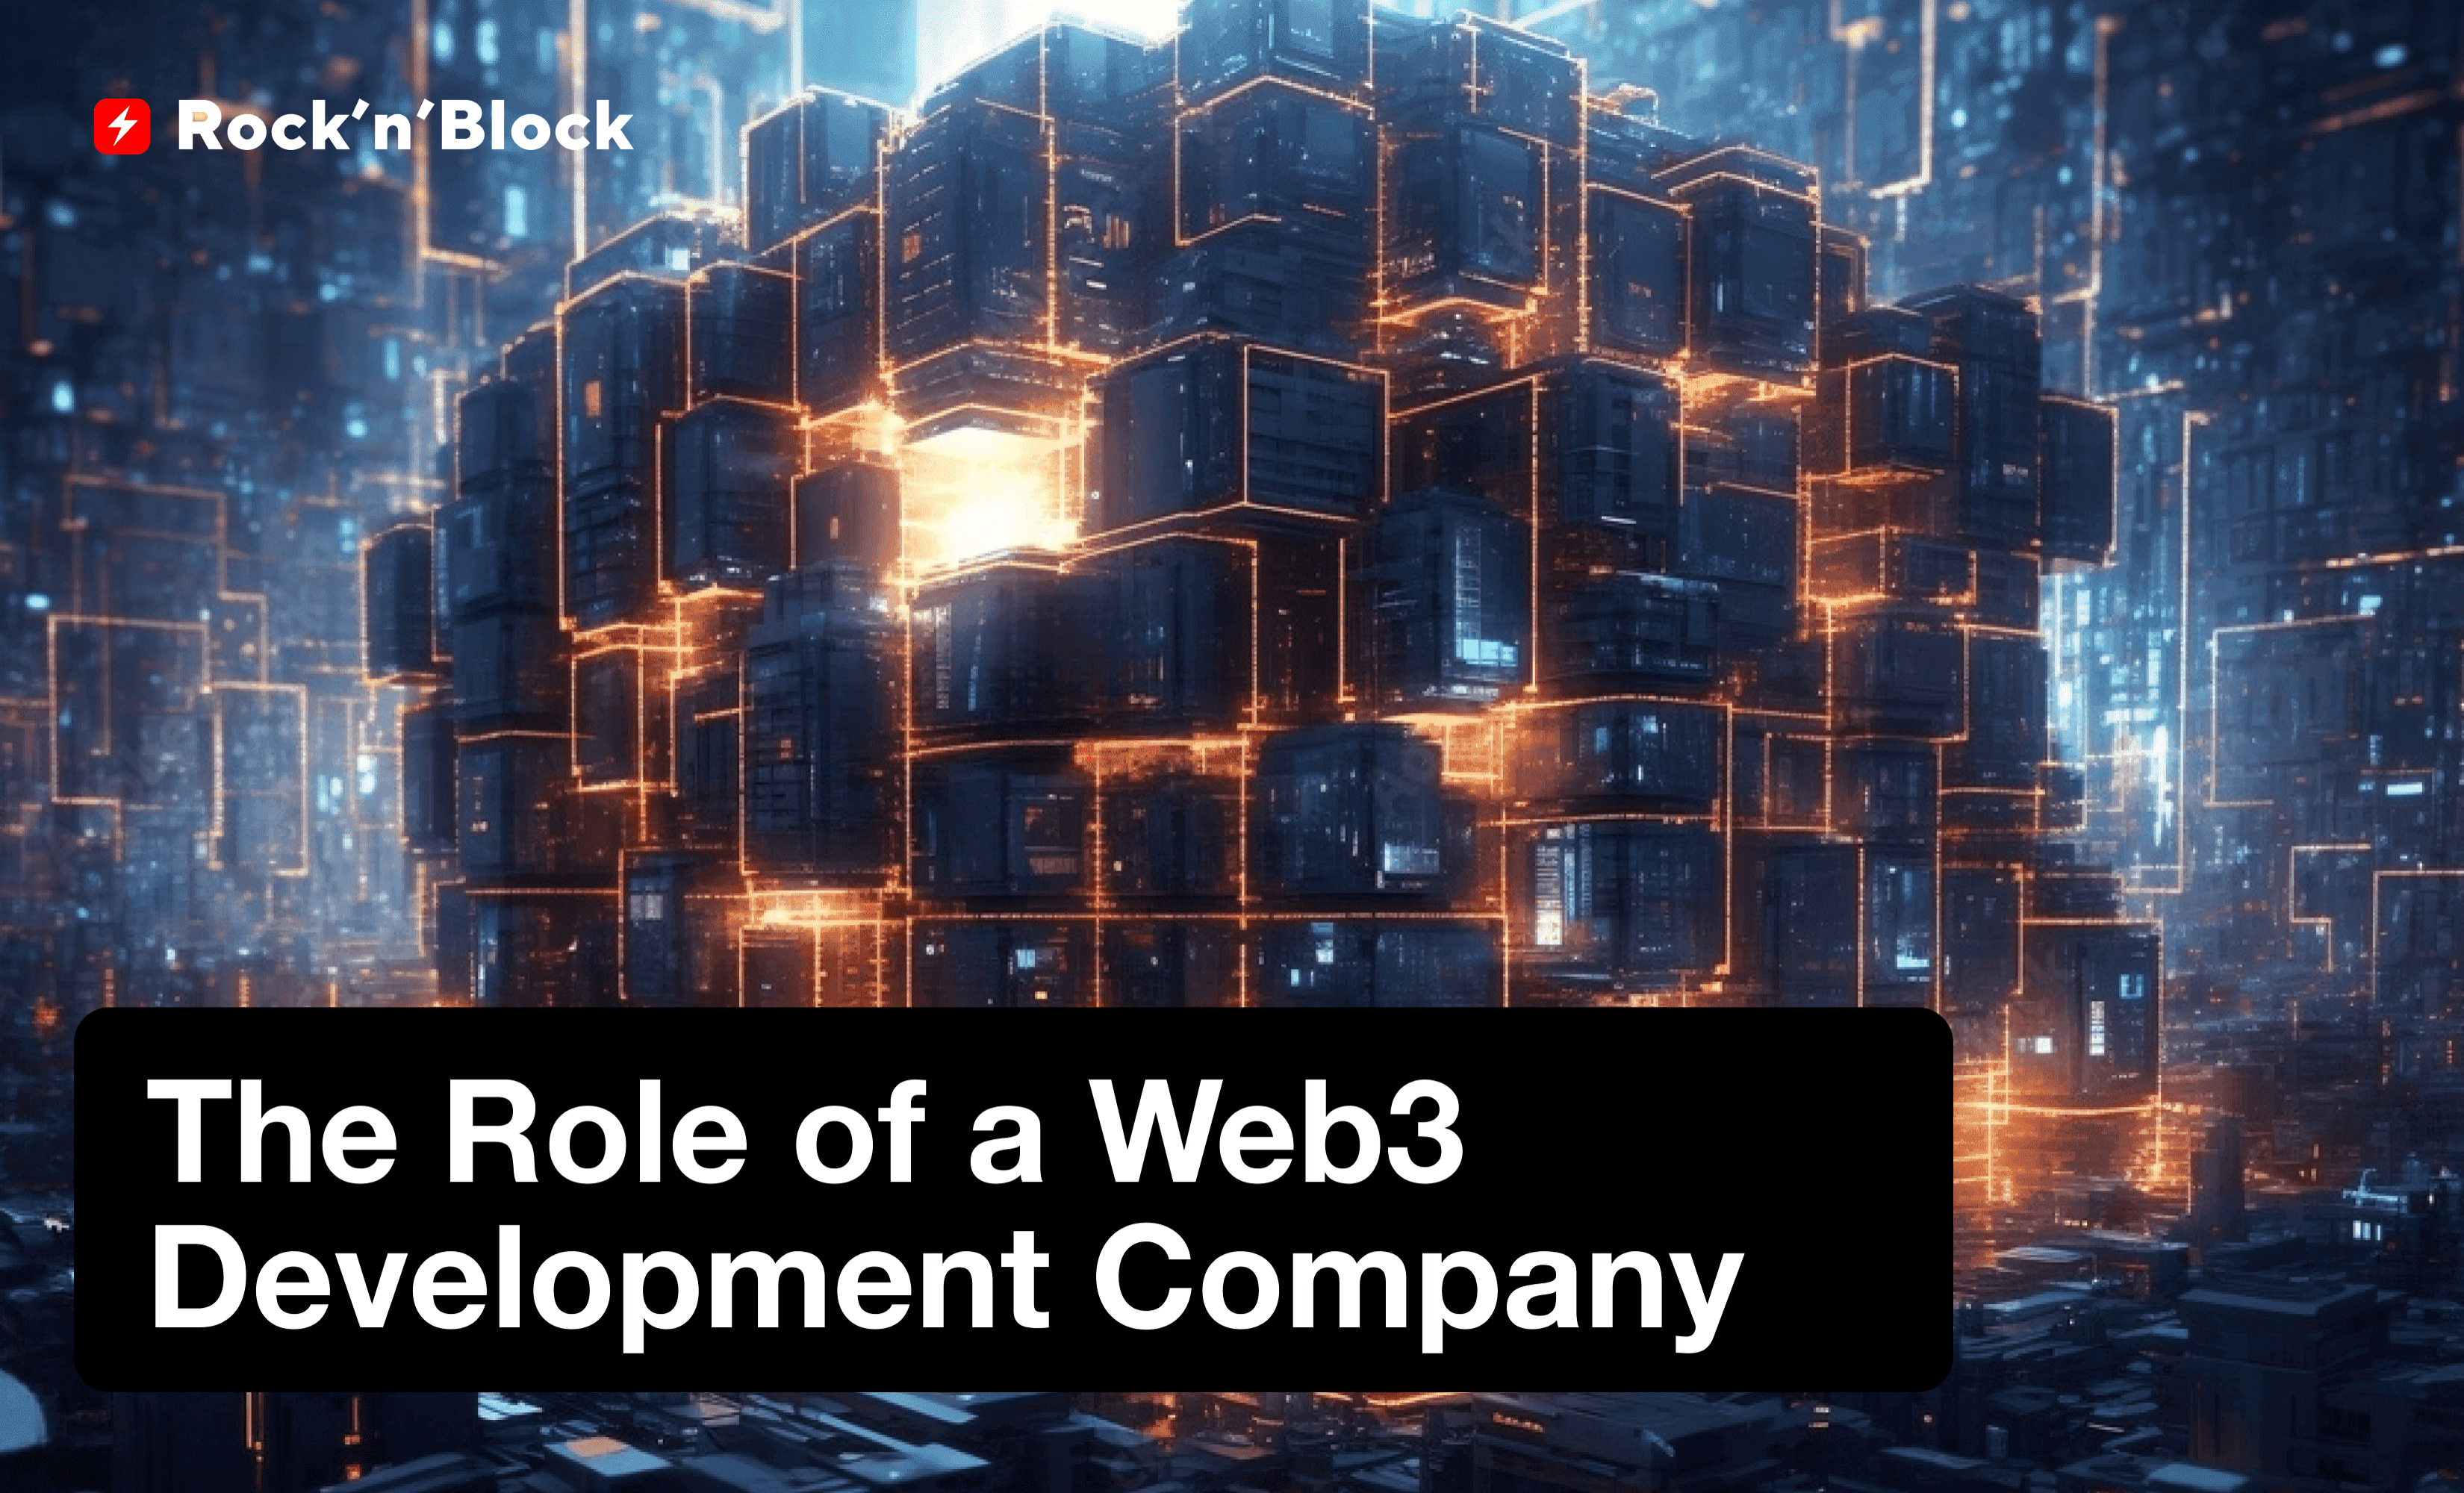 Web3 development company - Rock'n'Block